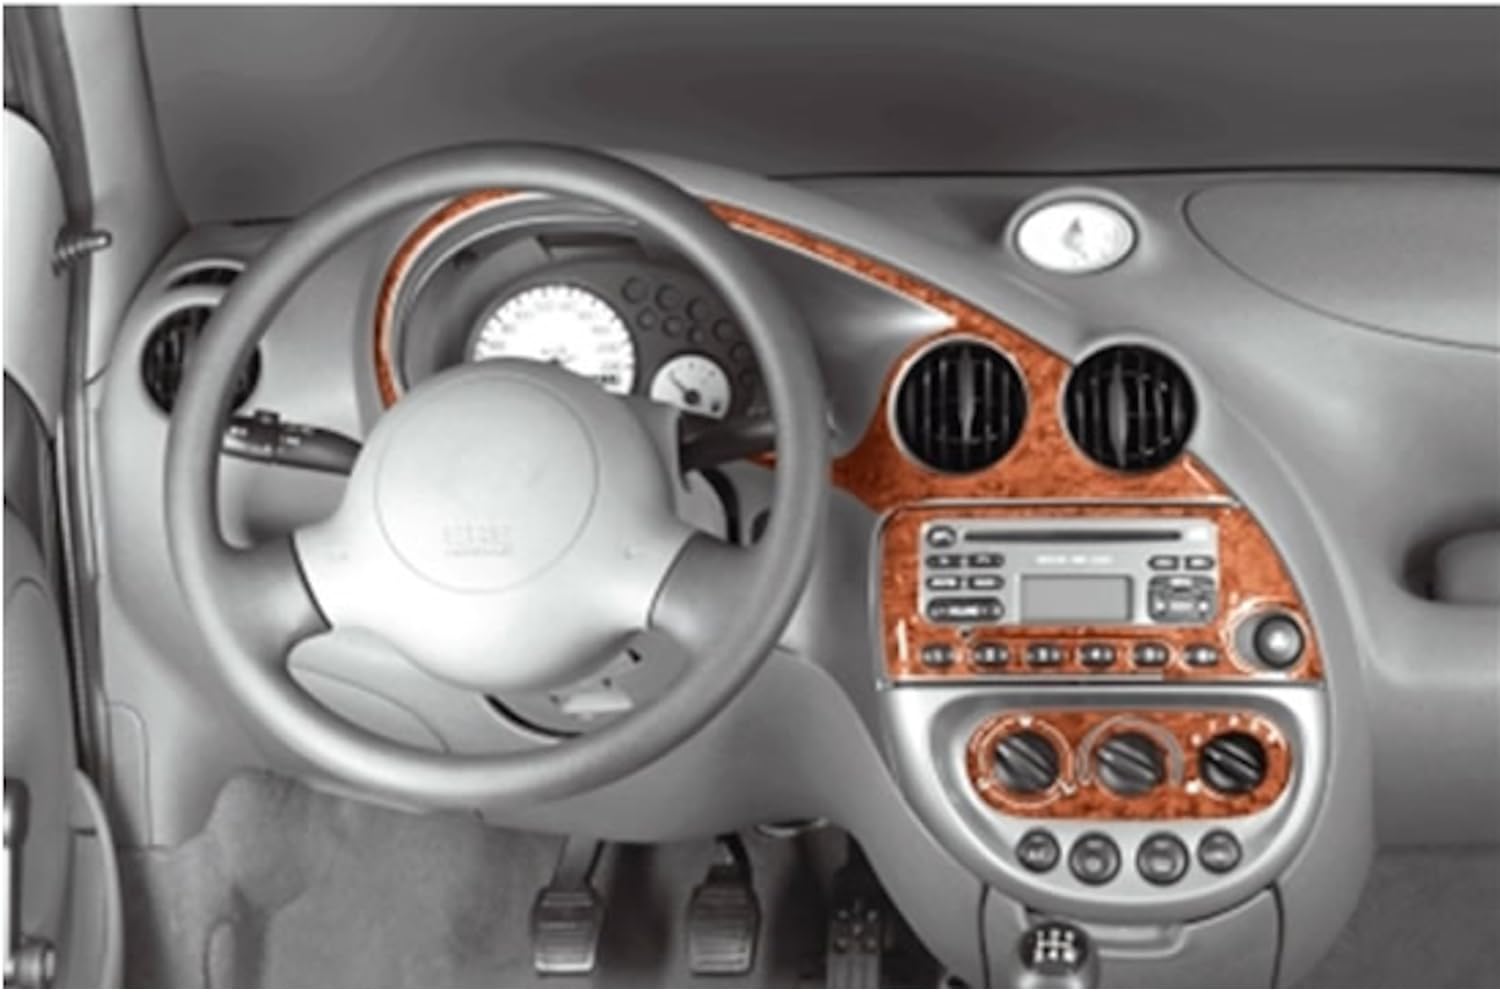 AUTOKLEIDUNG® Cockpit Dekor kompatibel mit Ford Ka Baujahr 10/1996-02/2002 5 Teile | 3D Titan Optik von Autokleidung